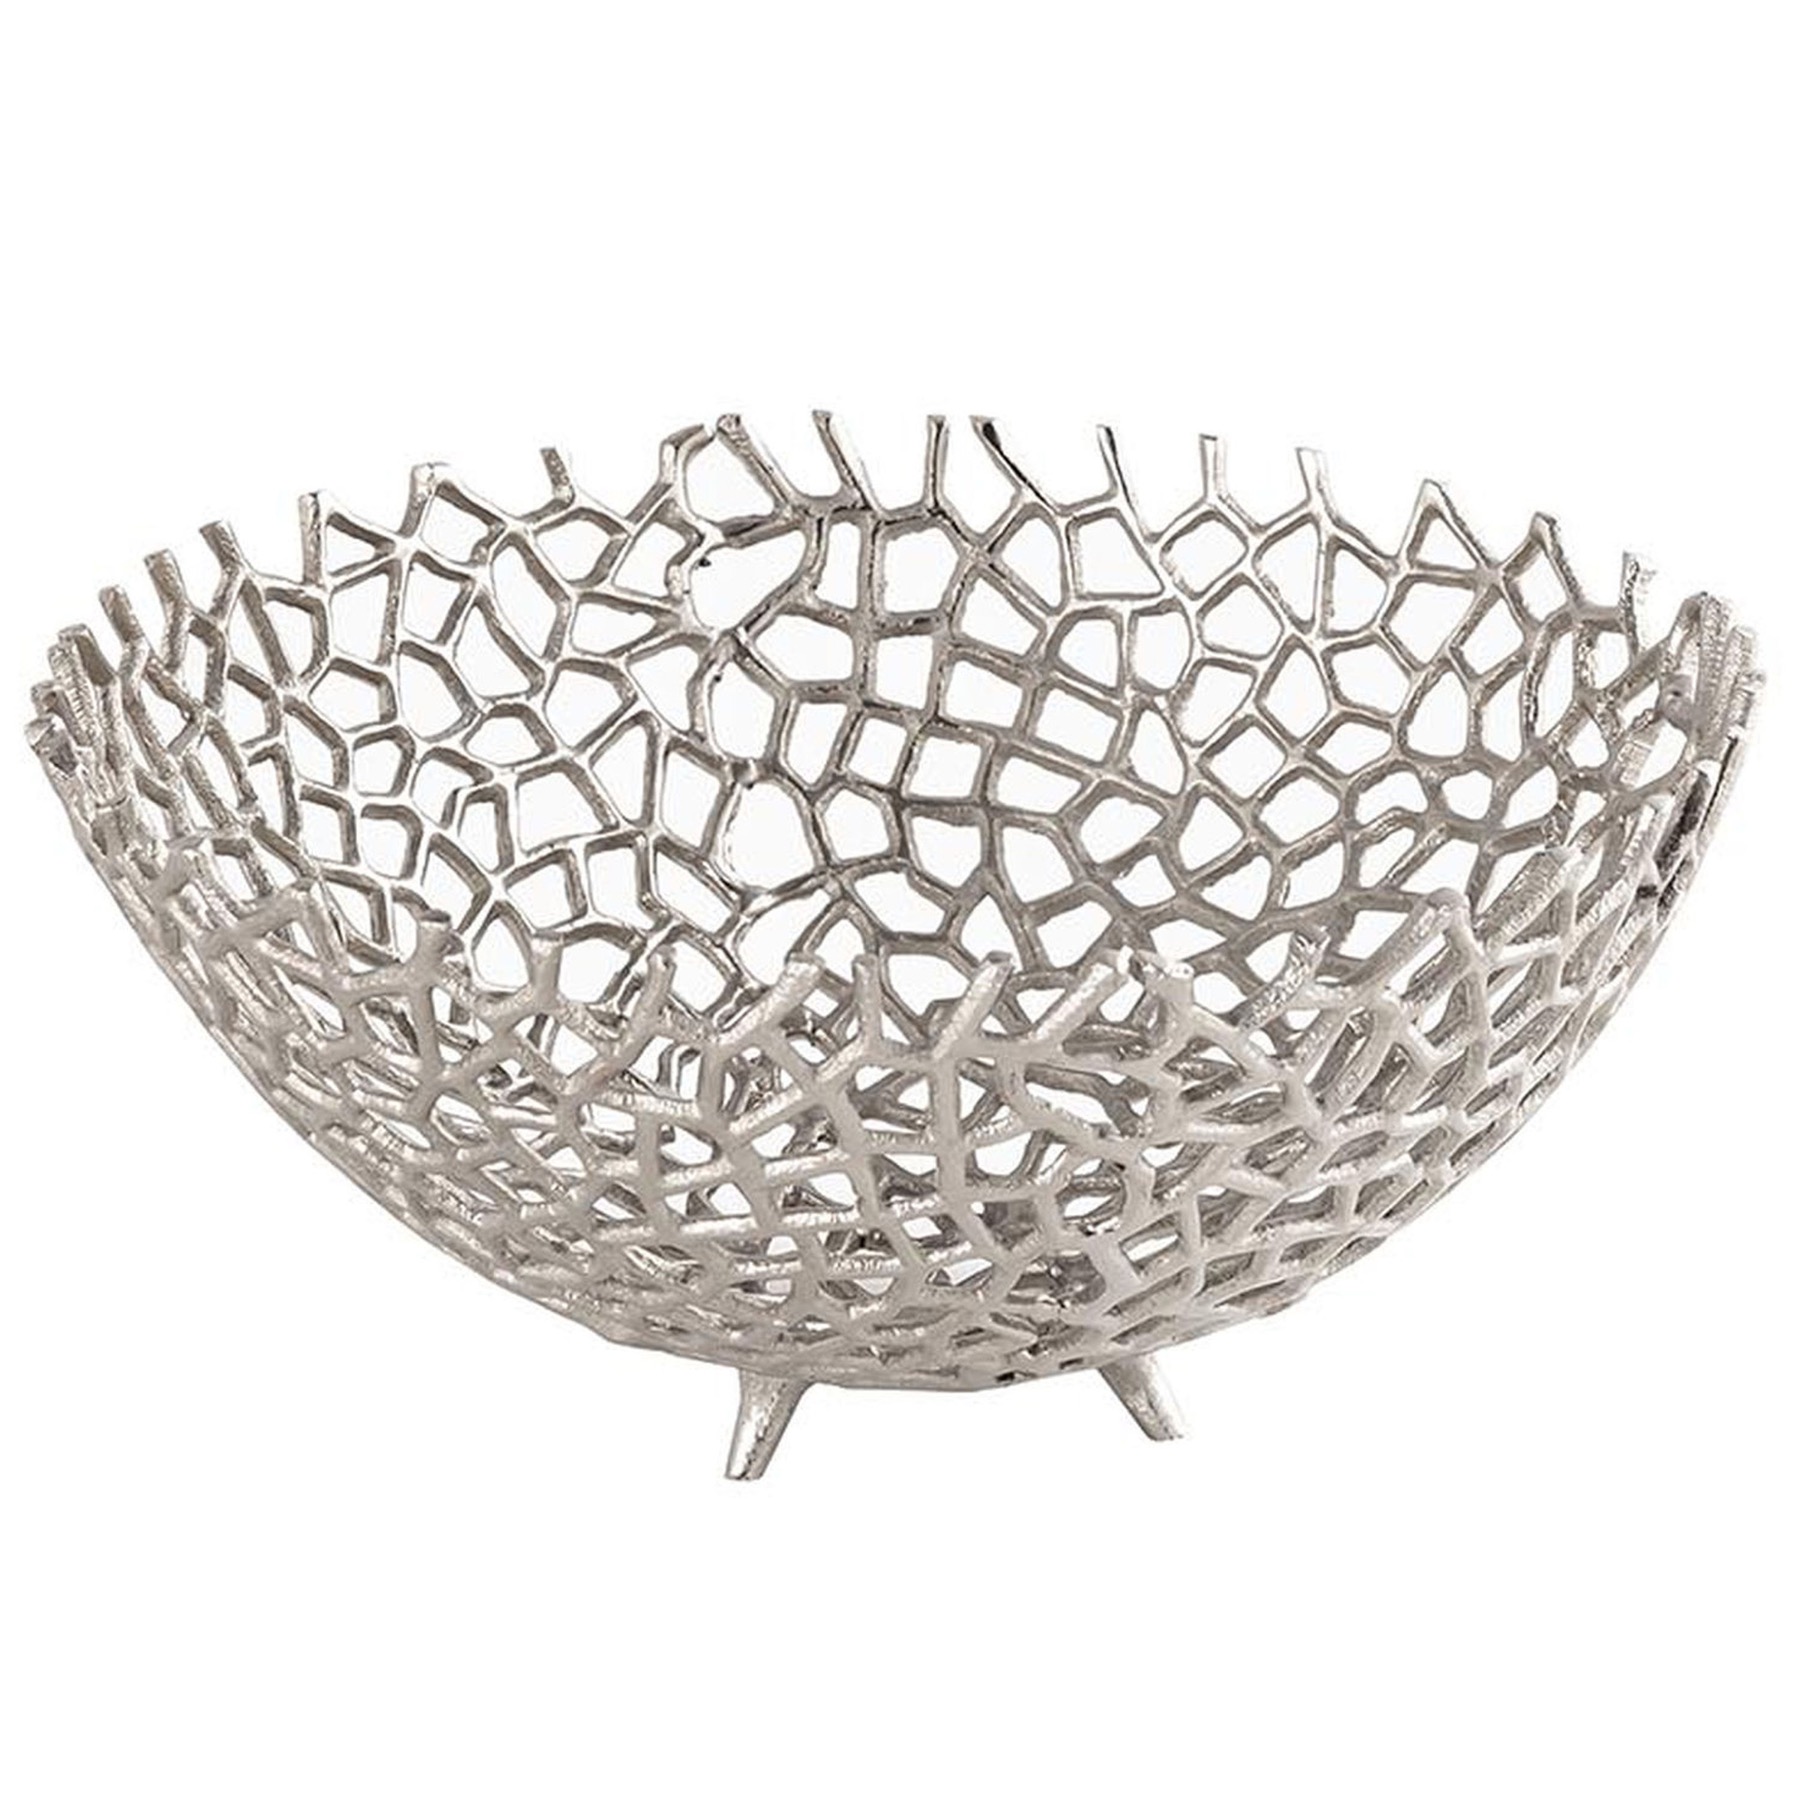 Farrah Collection Silver decorative Bowl - Image 1